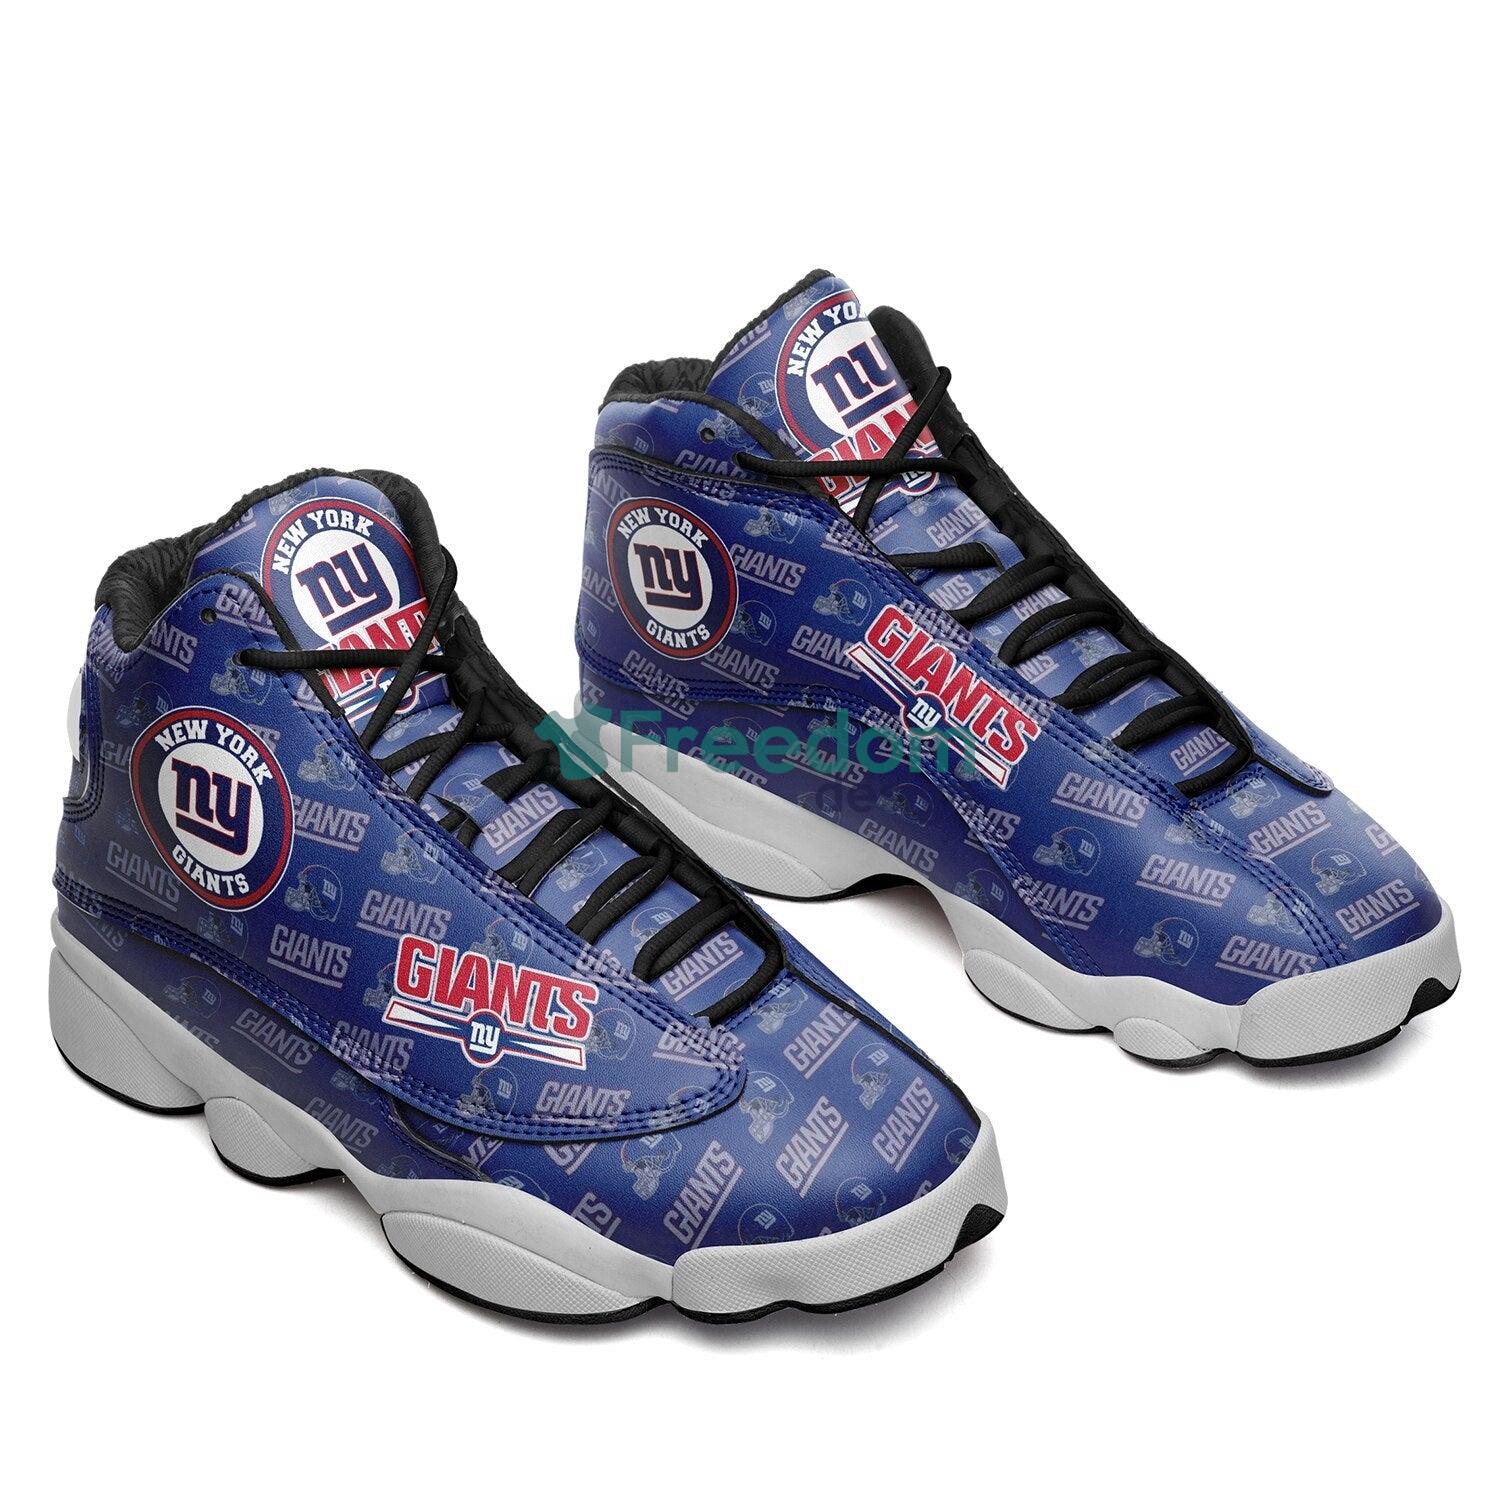 New York Giants Fans Air Jordan 13 Sneaker Shoes For Fans